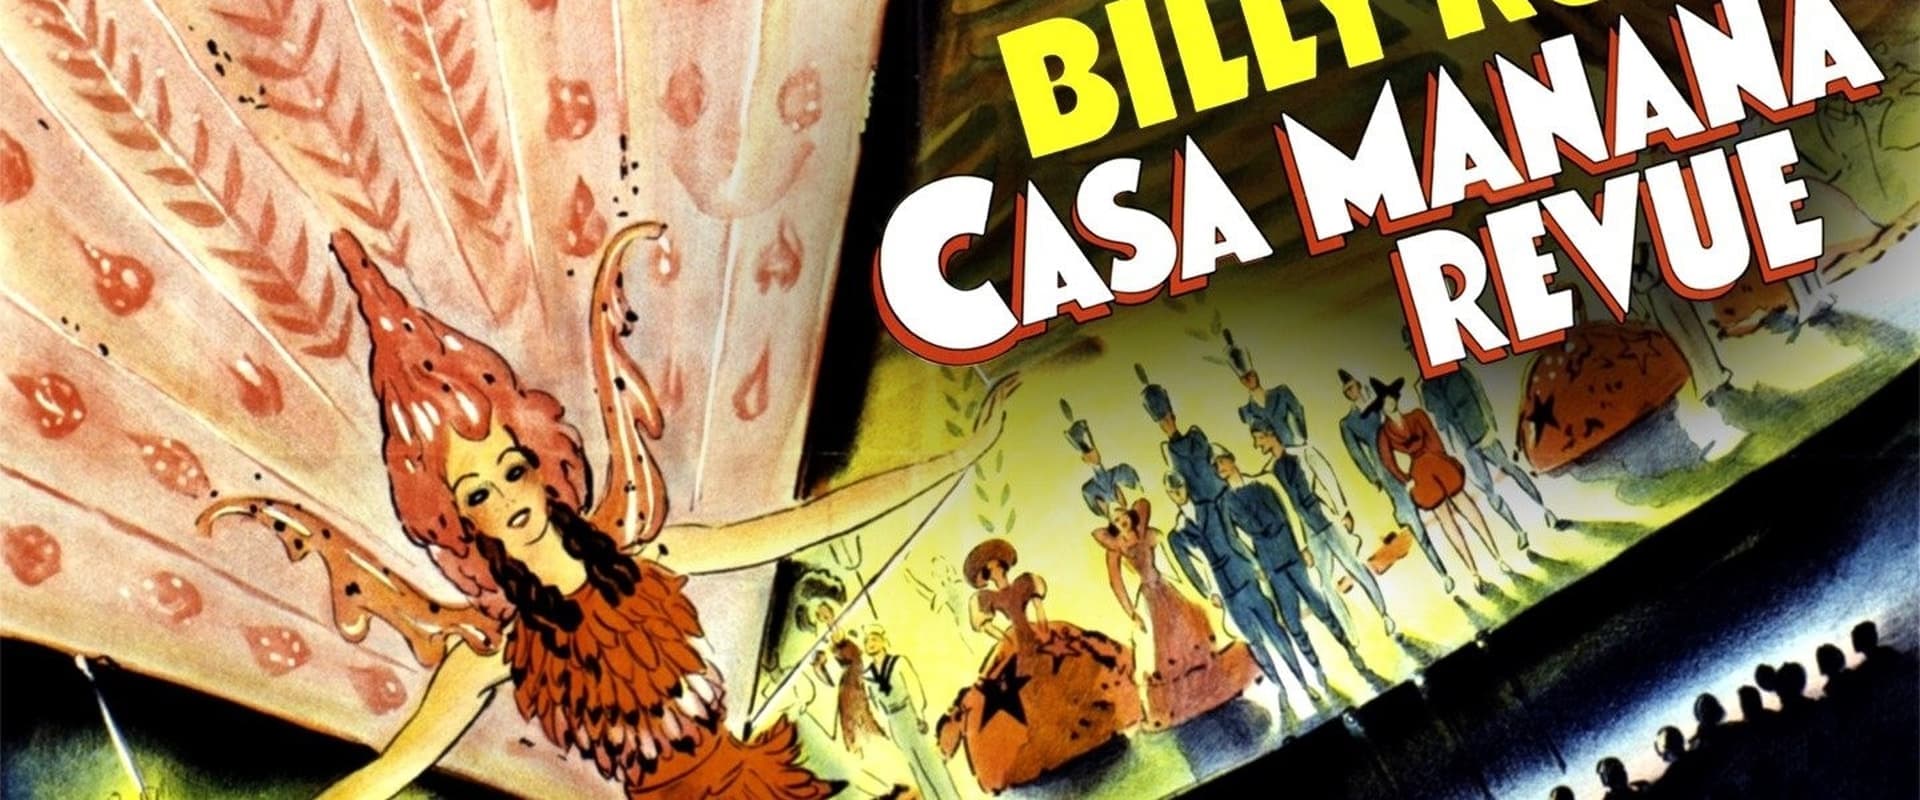 Billy Rose's Casa Mañana Revue